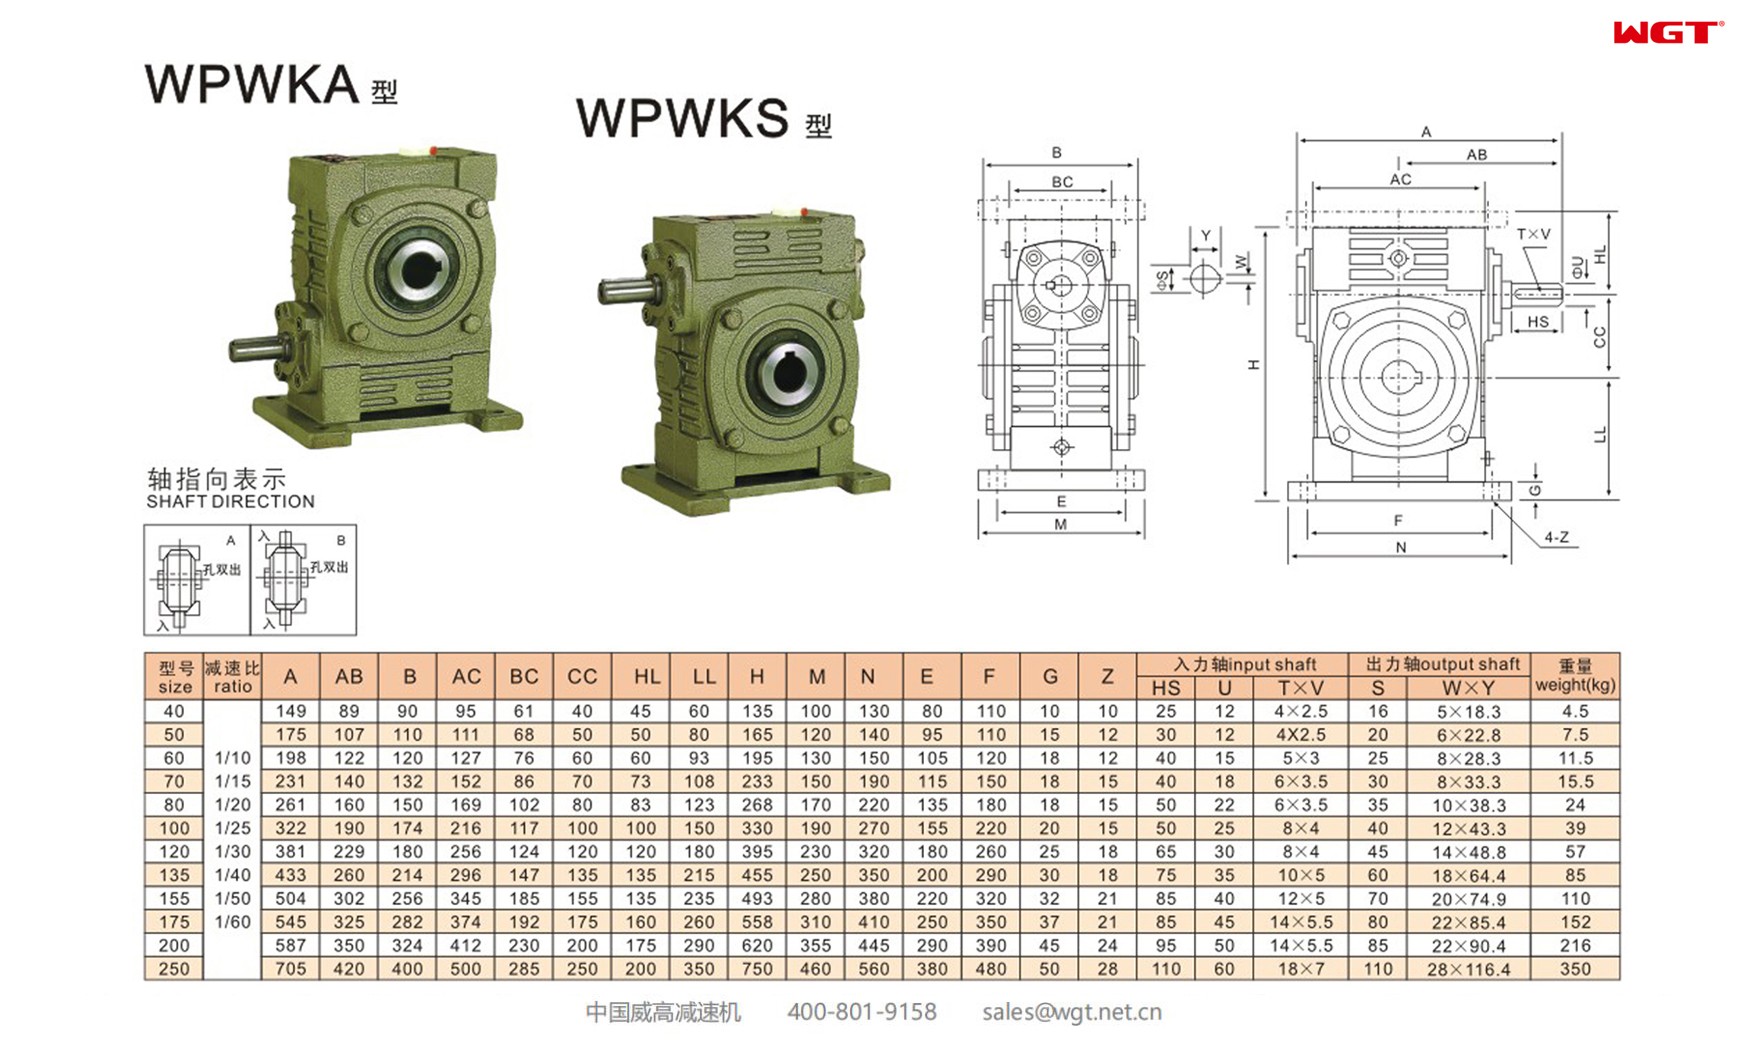 WPWKS200 worm gear reducer universal speed reducer 